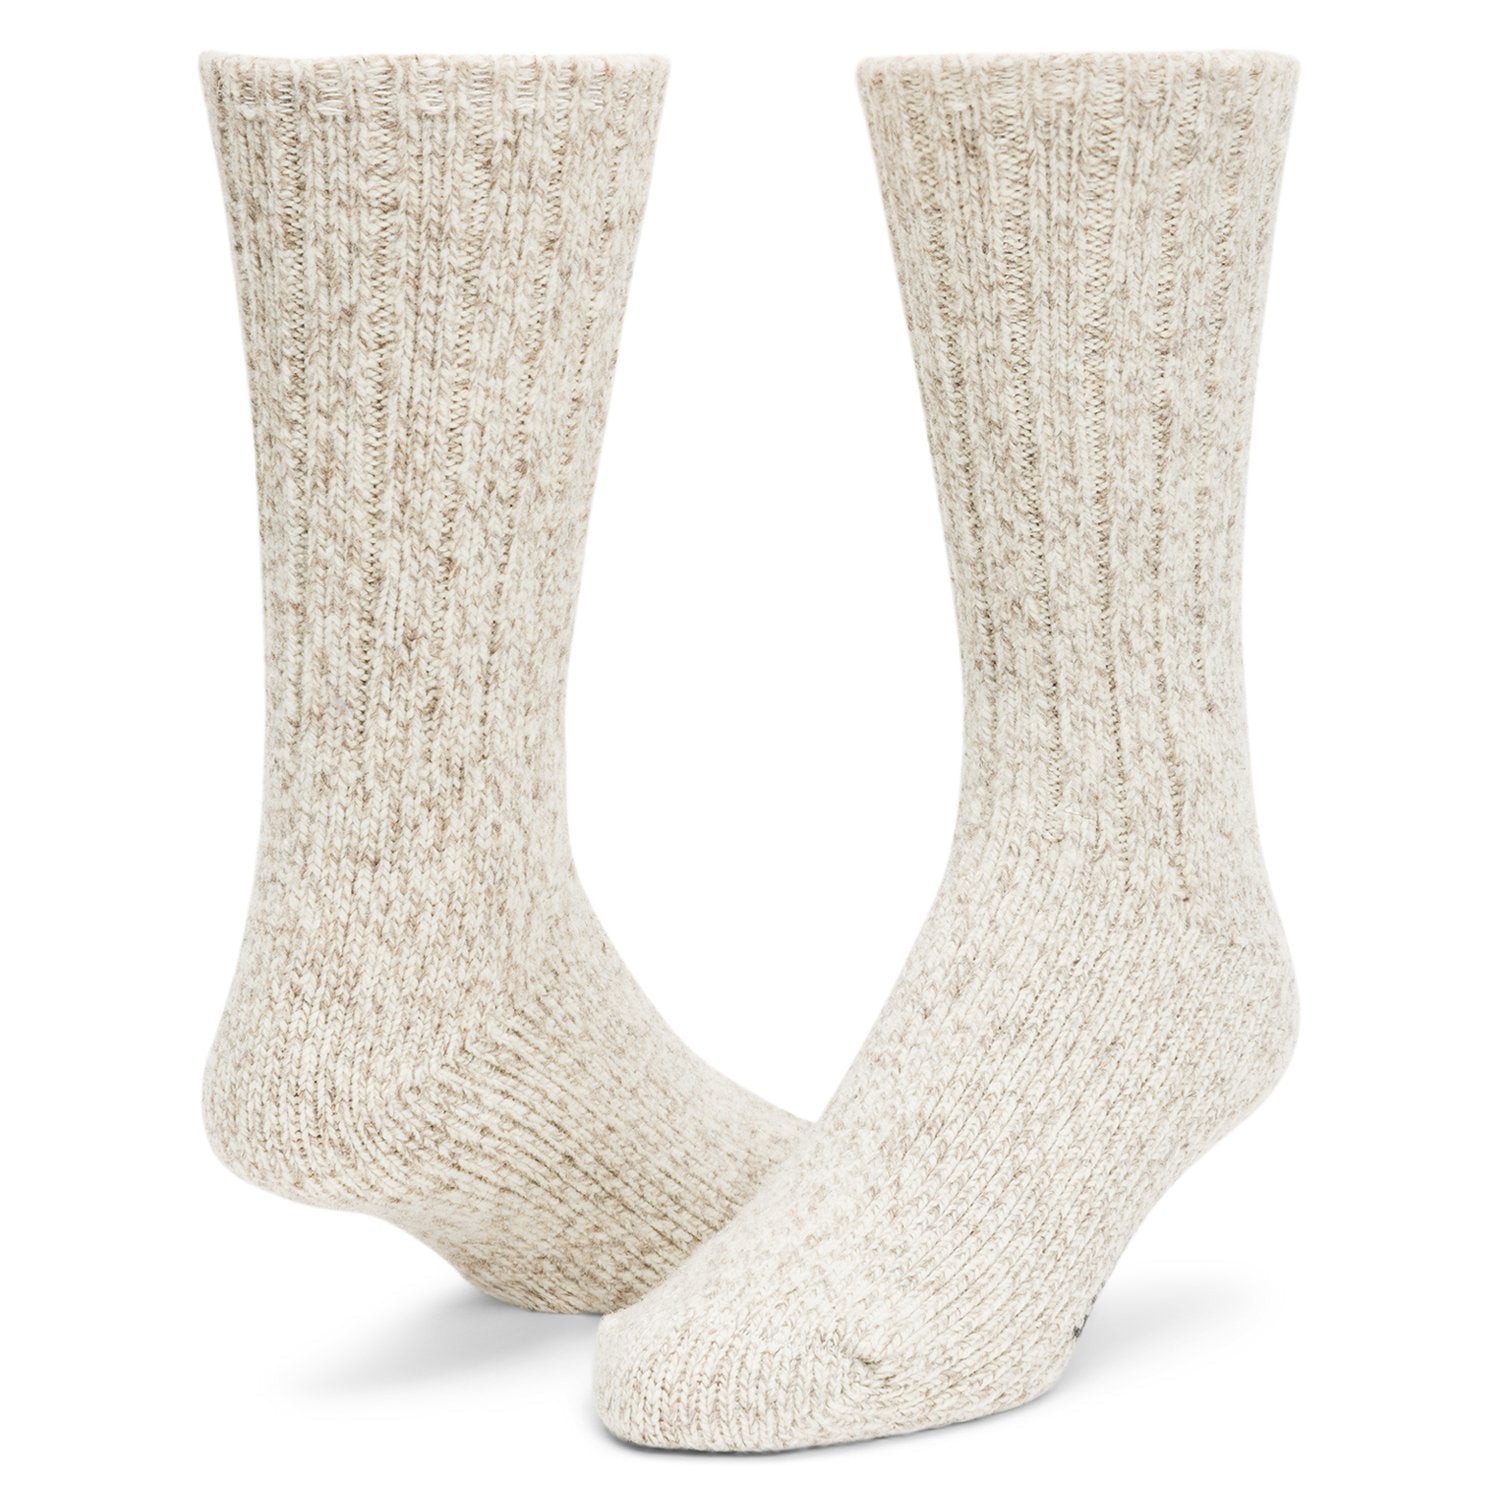 El-Pine Sock | Wigwam Socks